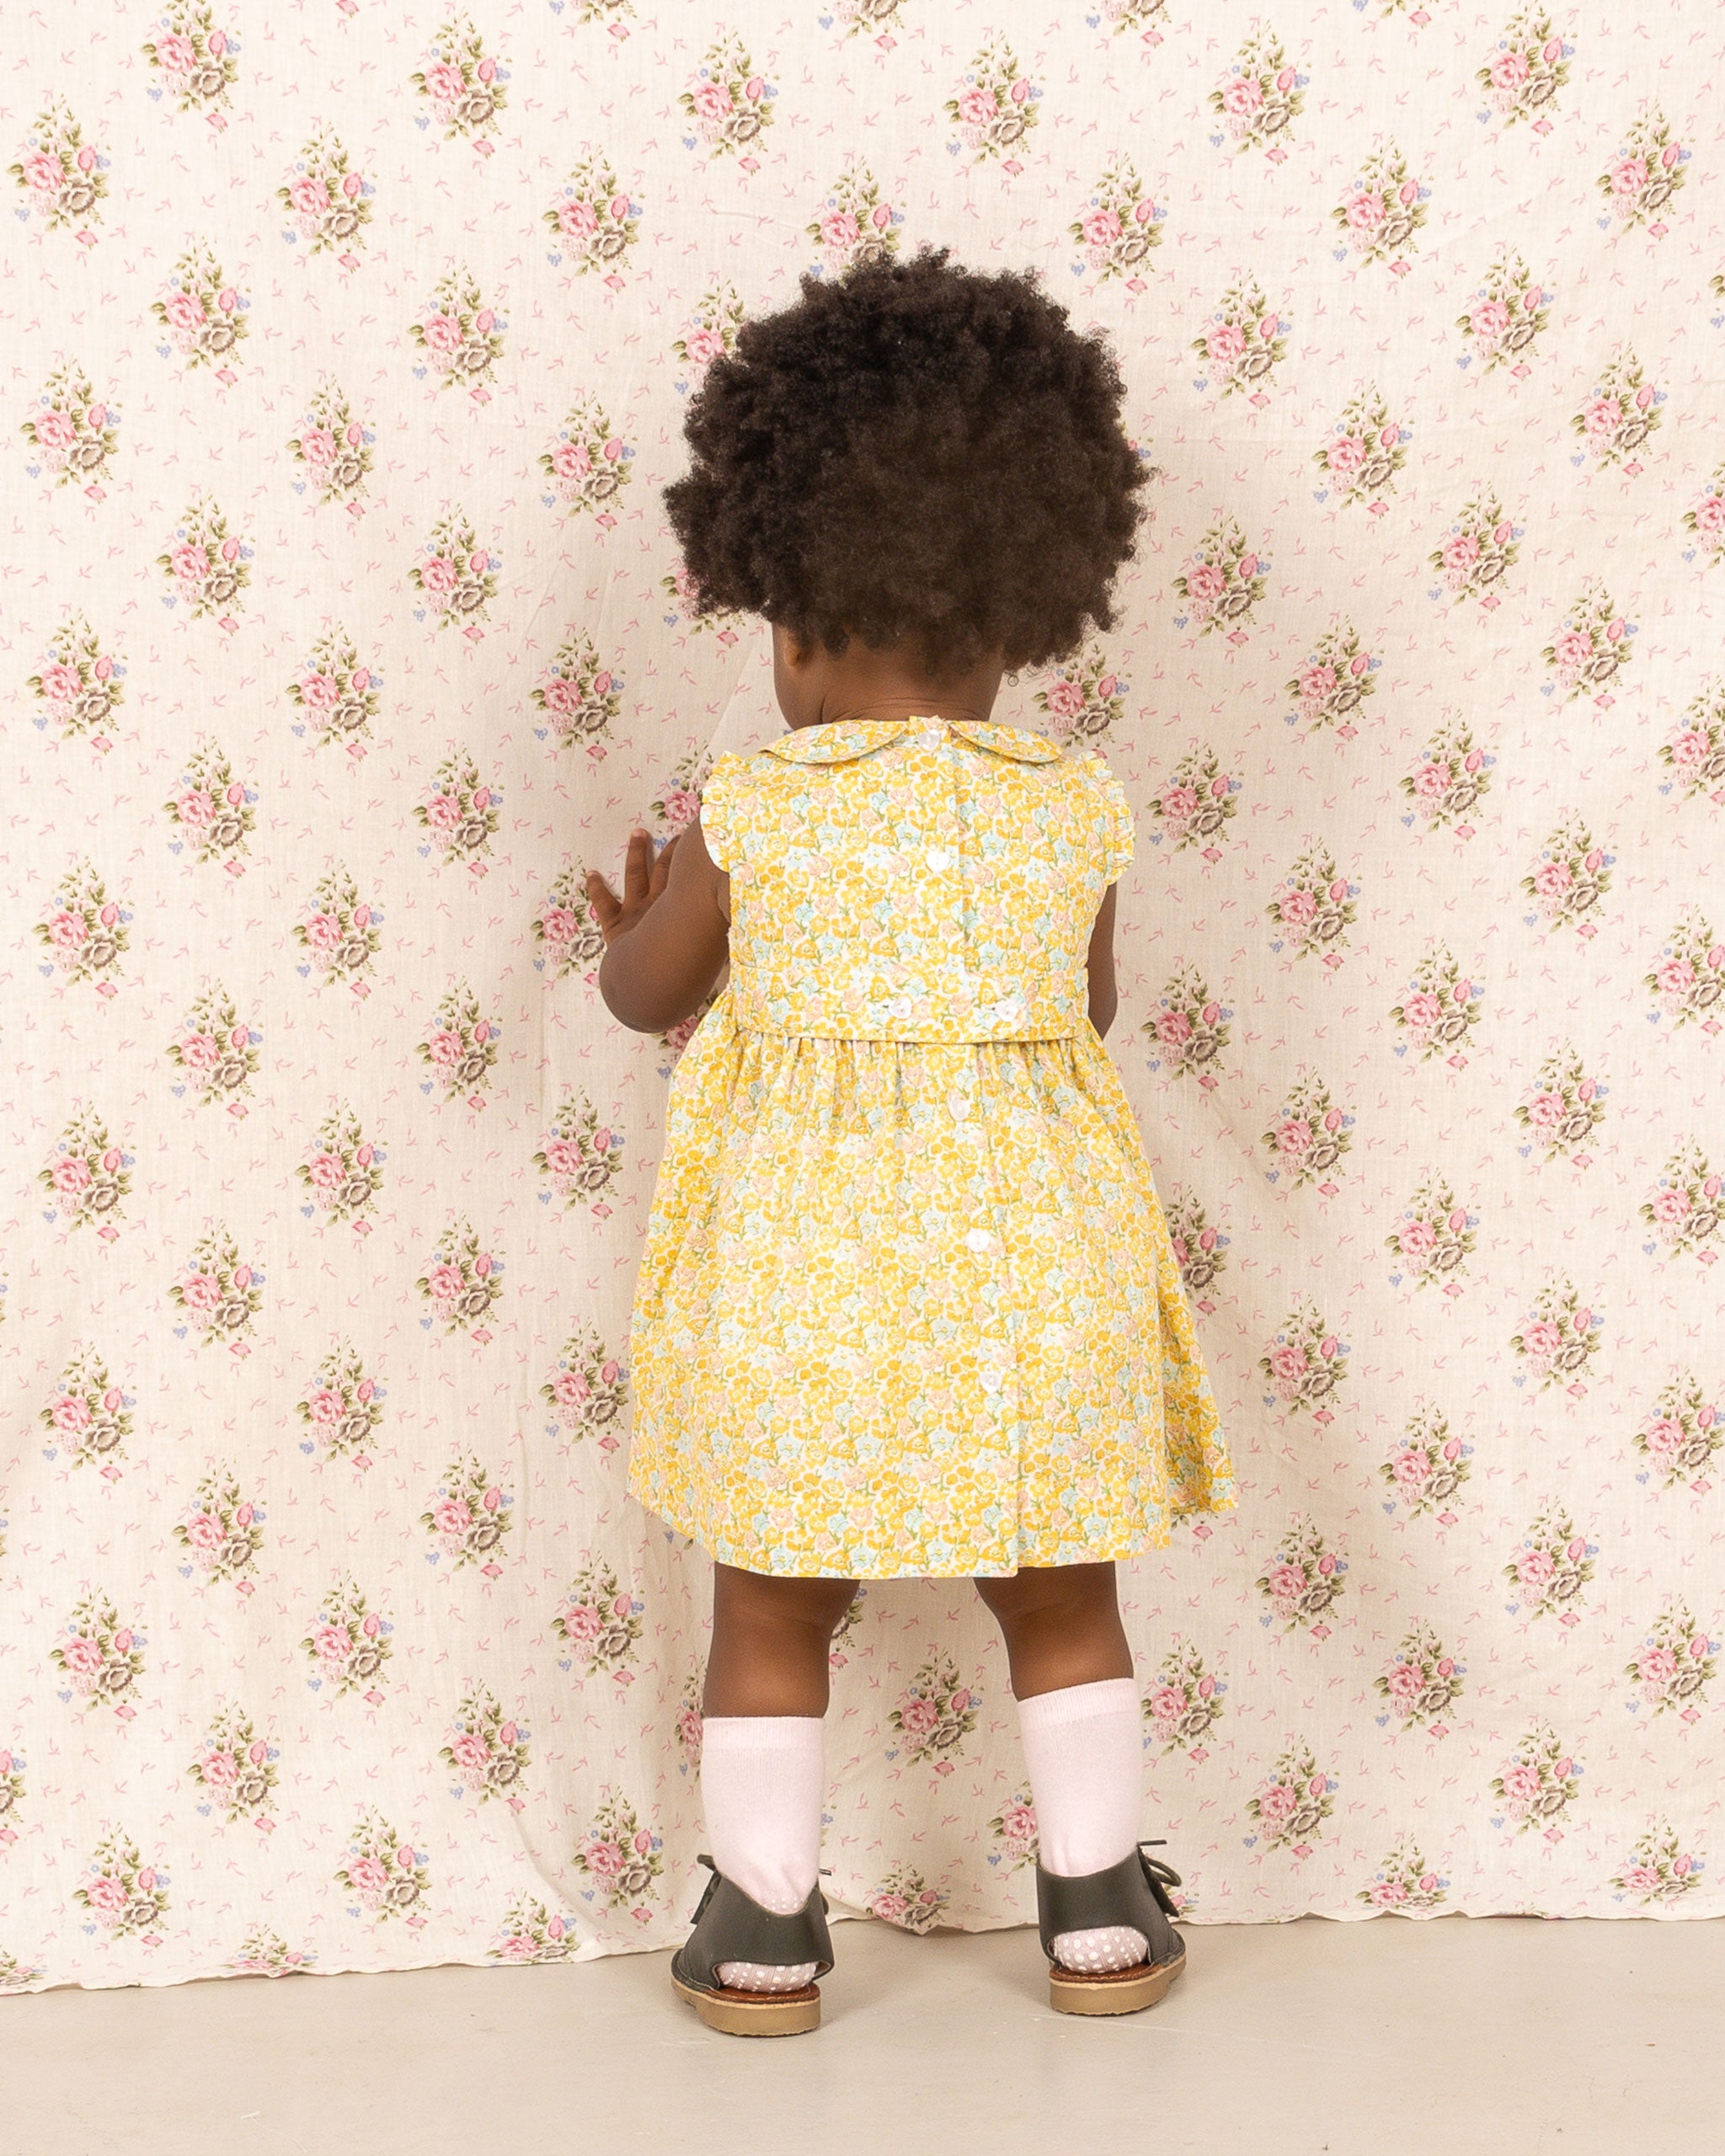 baby girl wearing smock dress, yellow, back view 